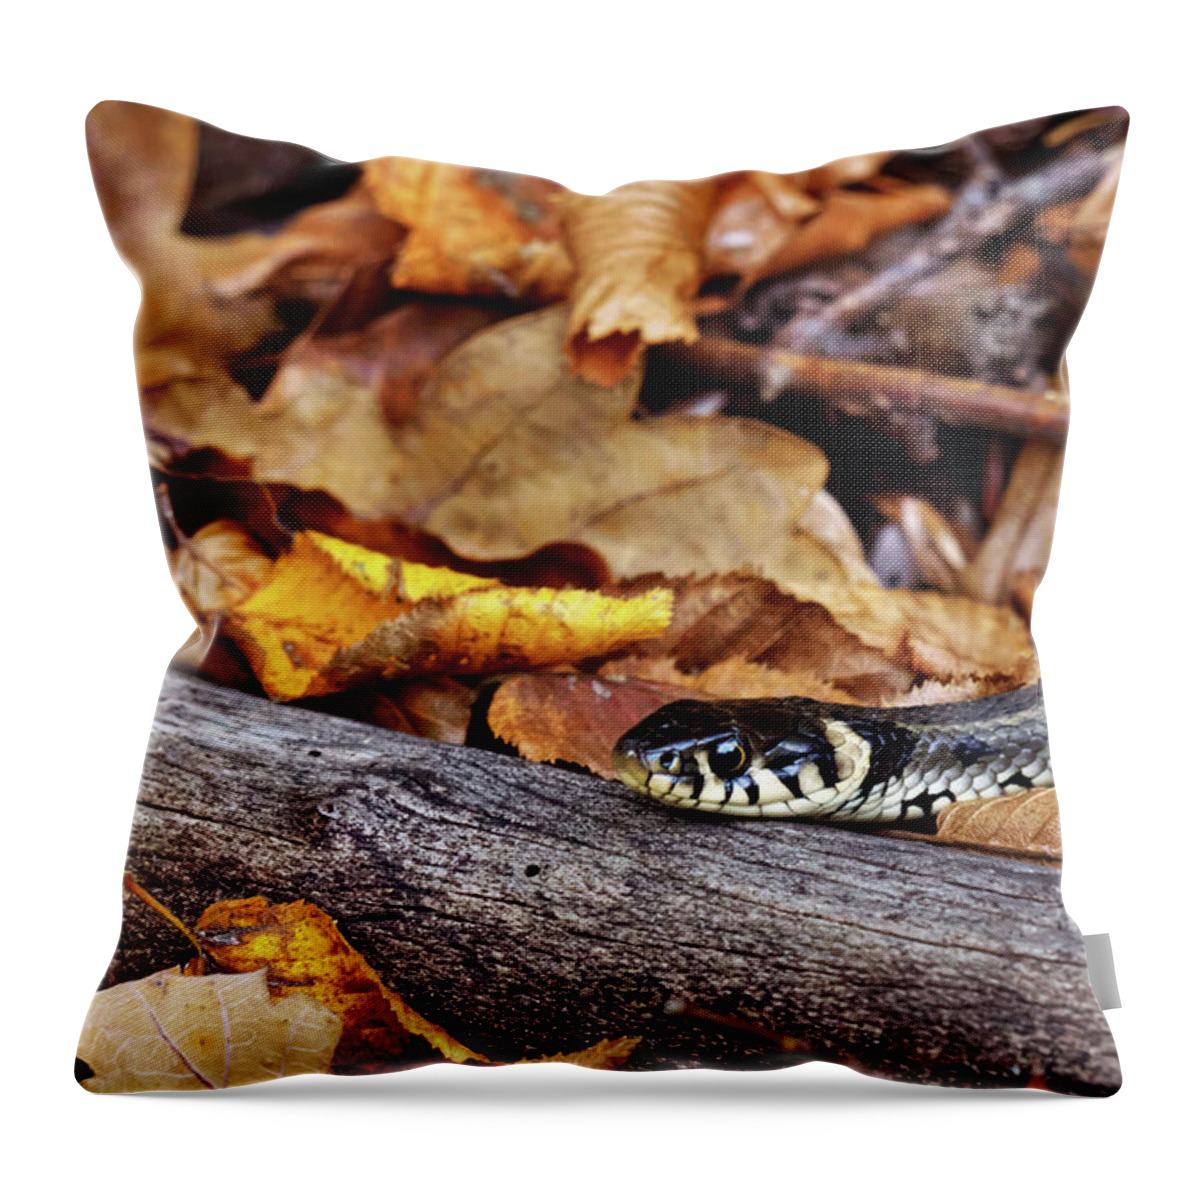 Snake Throw Pillow featuring the photograph Natrix natrix by Ivan Slosar